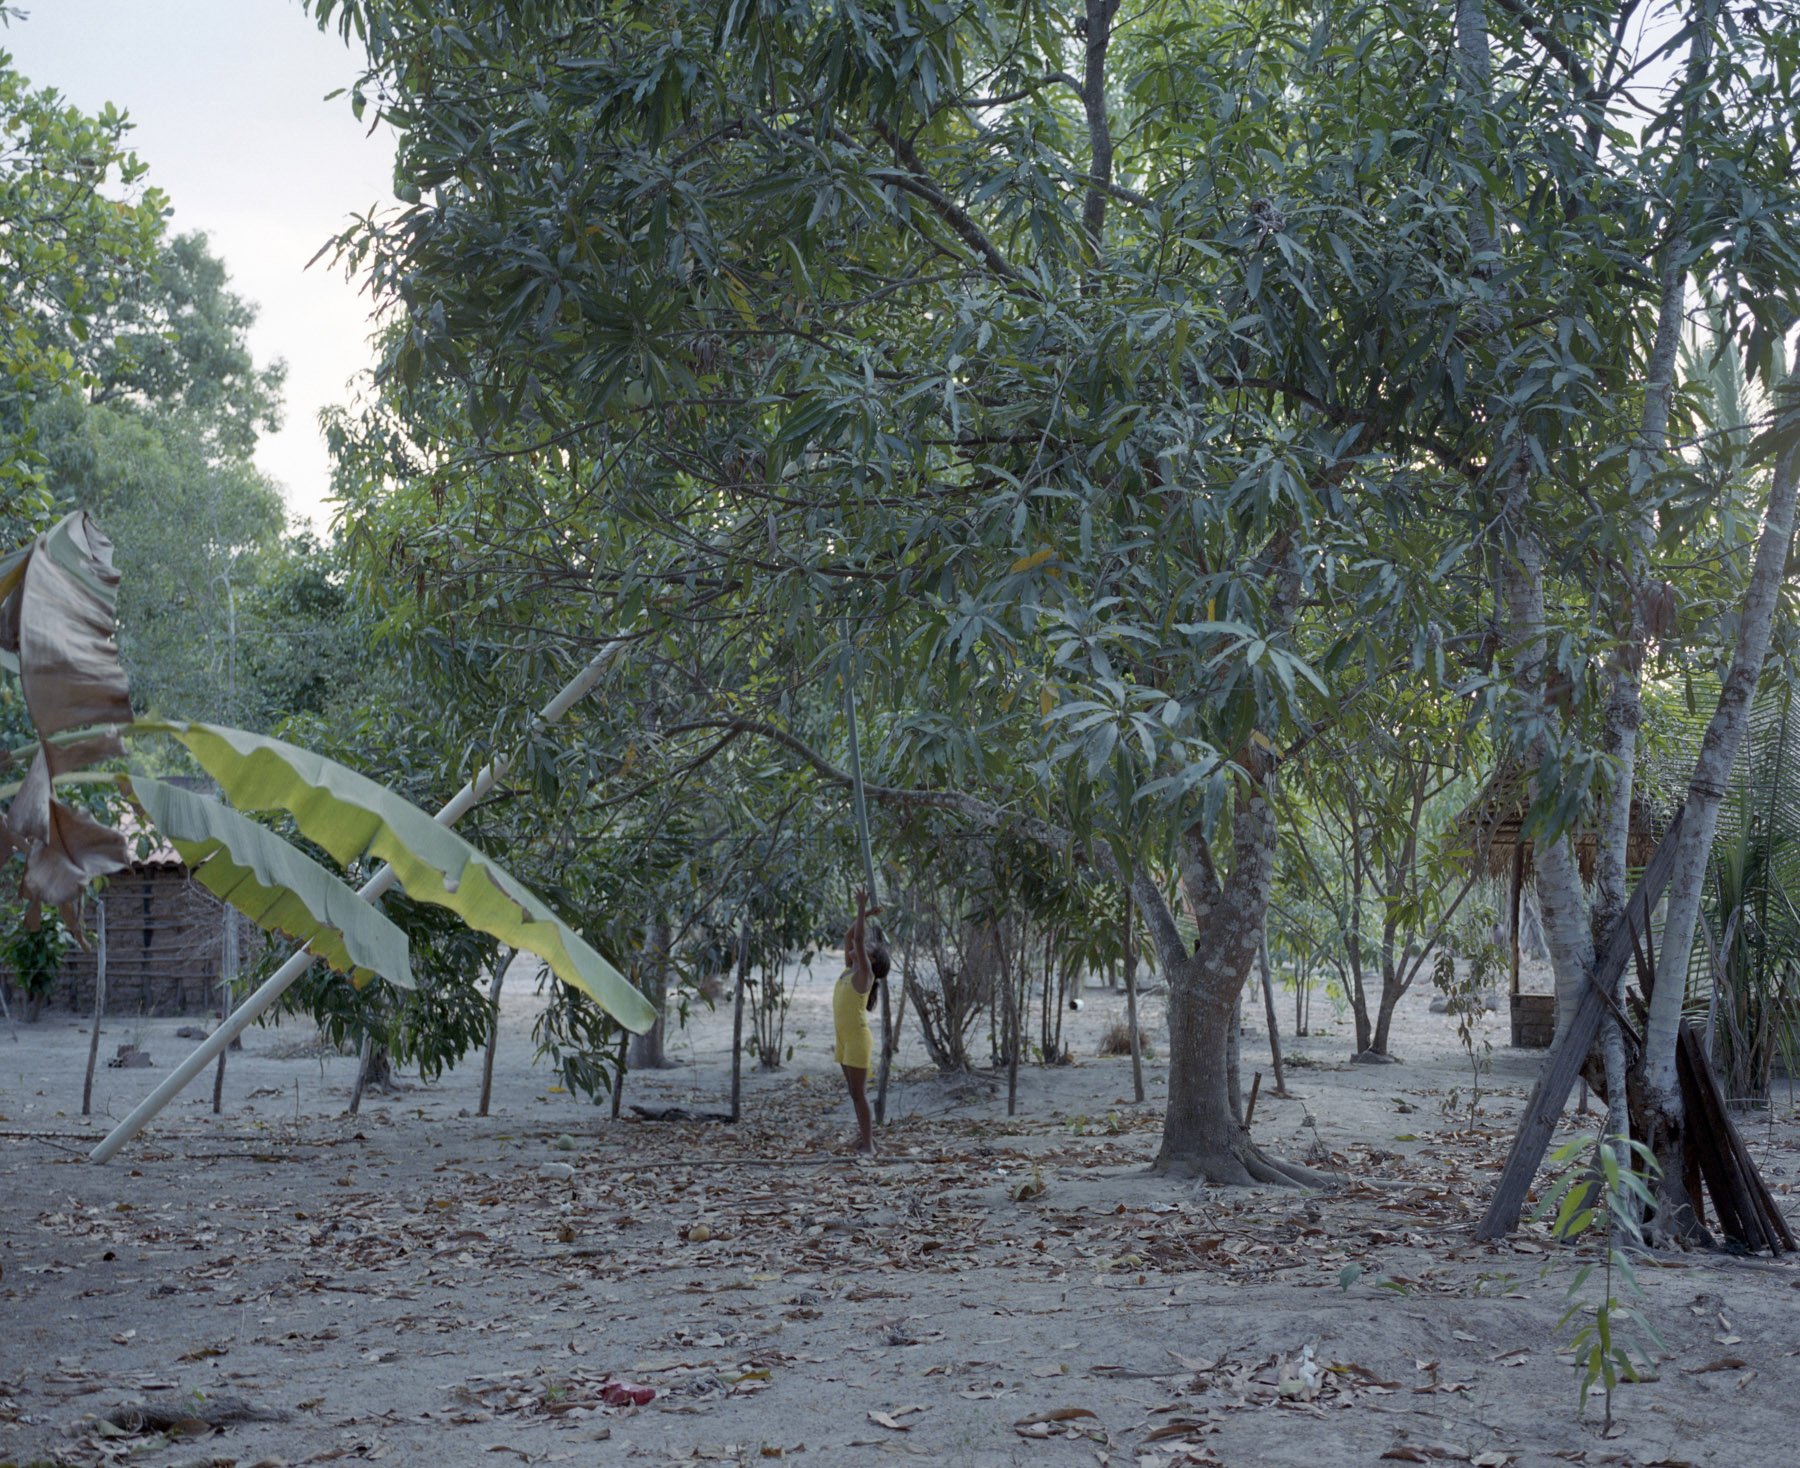  Santa Rosa do Pretos, Maranhão, Brazil, 2017. Bia, a girl from the Quilombo of Santa Rosa dos Pretos is collecting mangos from the yard tree. 